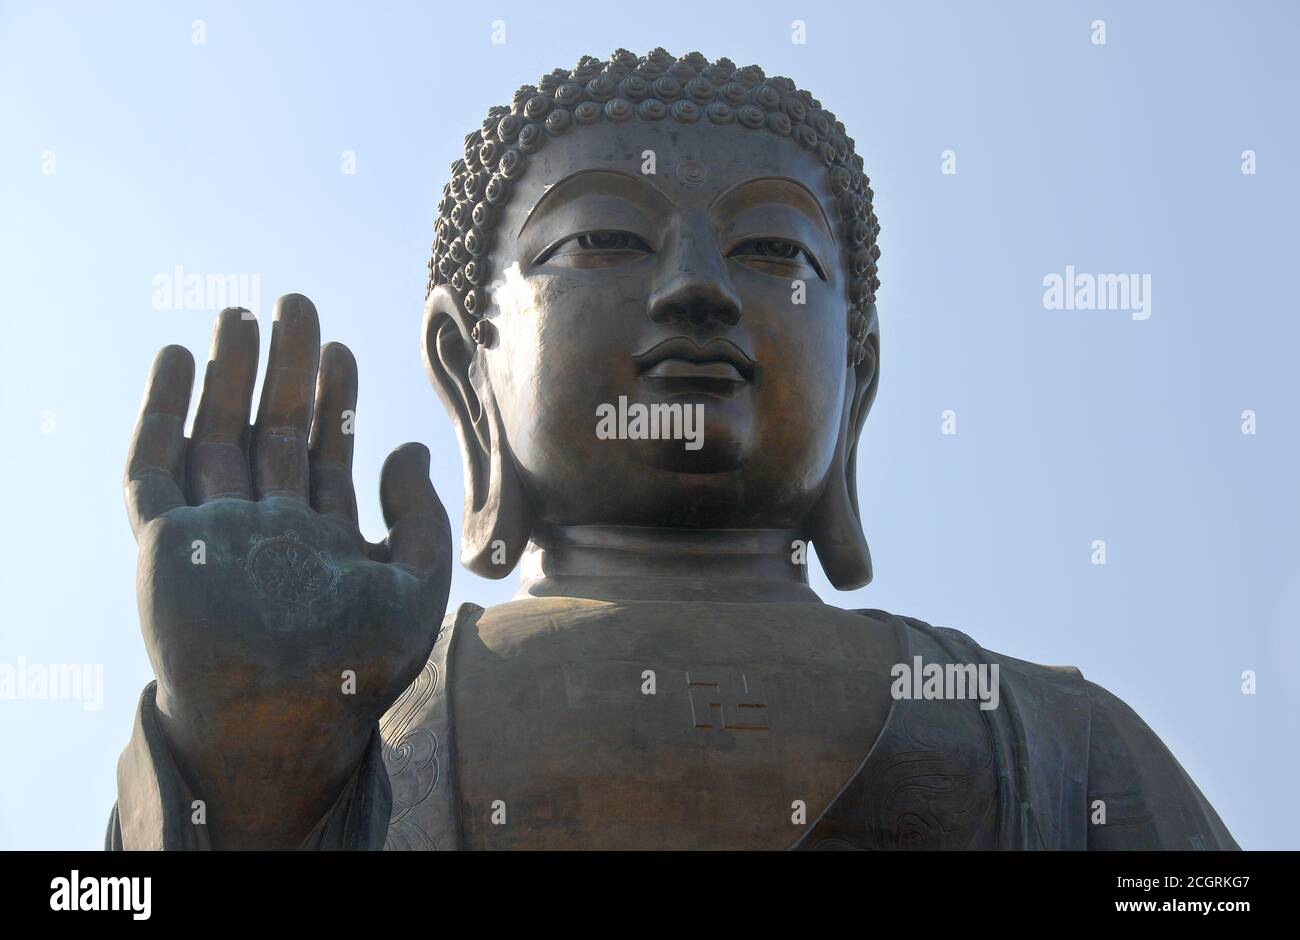 The Big Buddha or Tian Tan Buddha on Lantau Island, Hong Kong, China. The Buddha Shakyamuni statue is at Ngong Ping near Po Lin Monastery on Lantau. Stock Photo